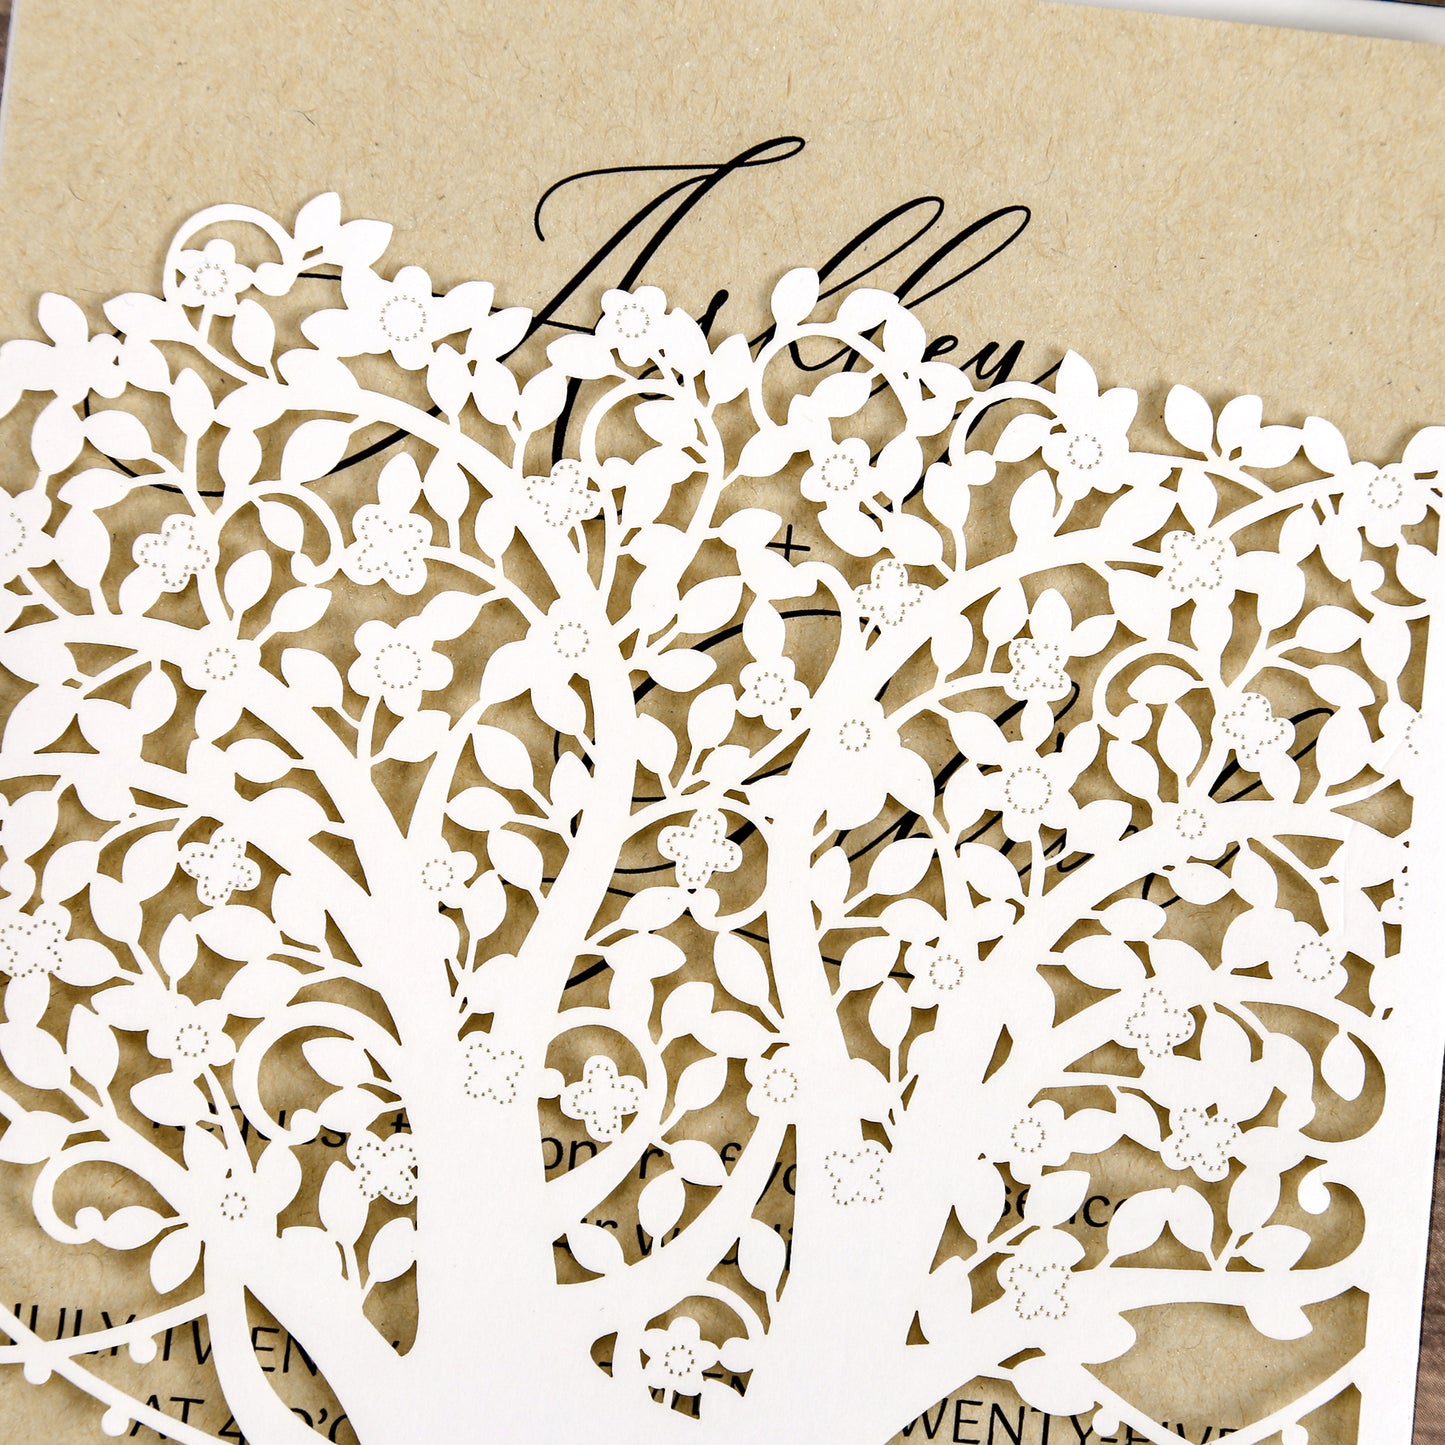 Laser Cut Wedding Invitations with Envelopes White, Kraft Paper Invitation Cards for Wedding, Invitations with Envelopes